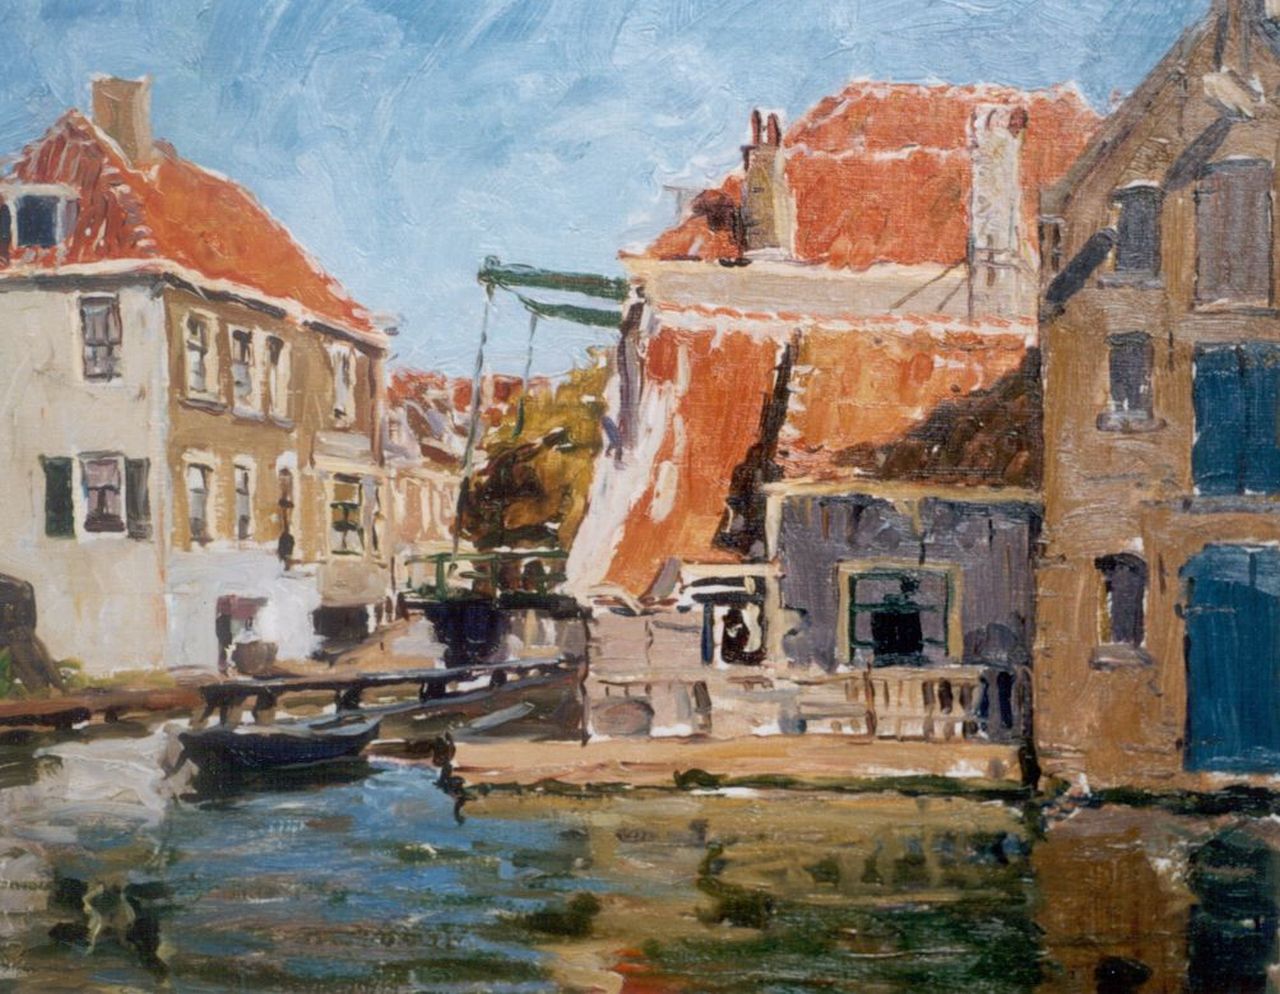 Dort W. van | Willem van Dort, A view of a Dutch town, oil on canvas 45.4 x 55.2 cm, signed l.r.